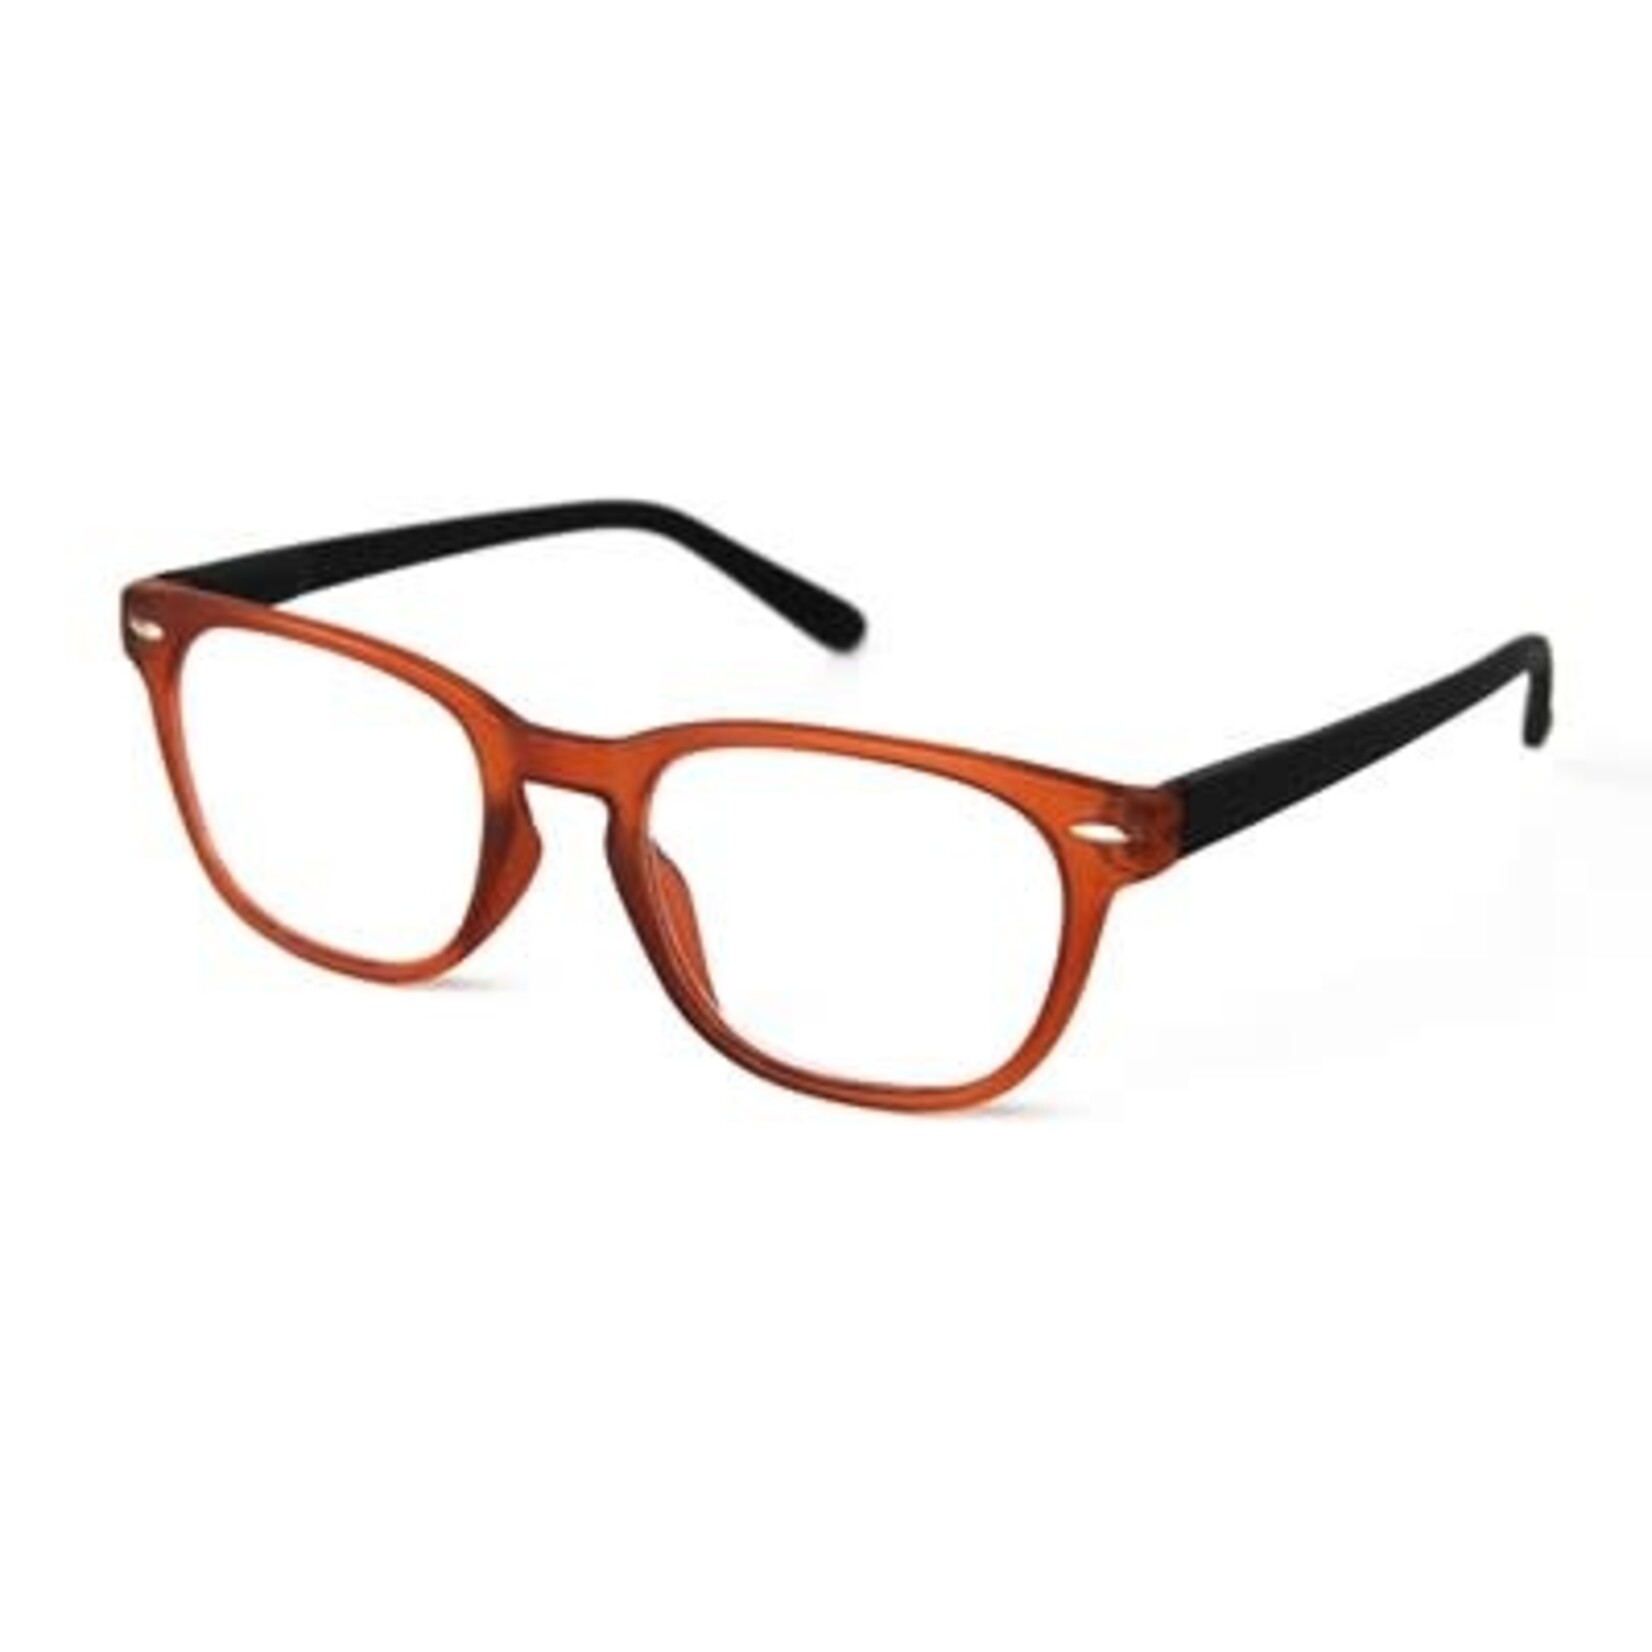 Optimum Optical Arlington Orange Reading Glasses